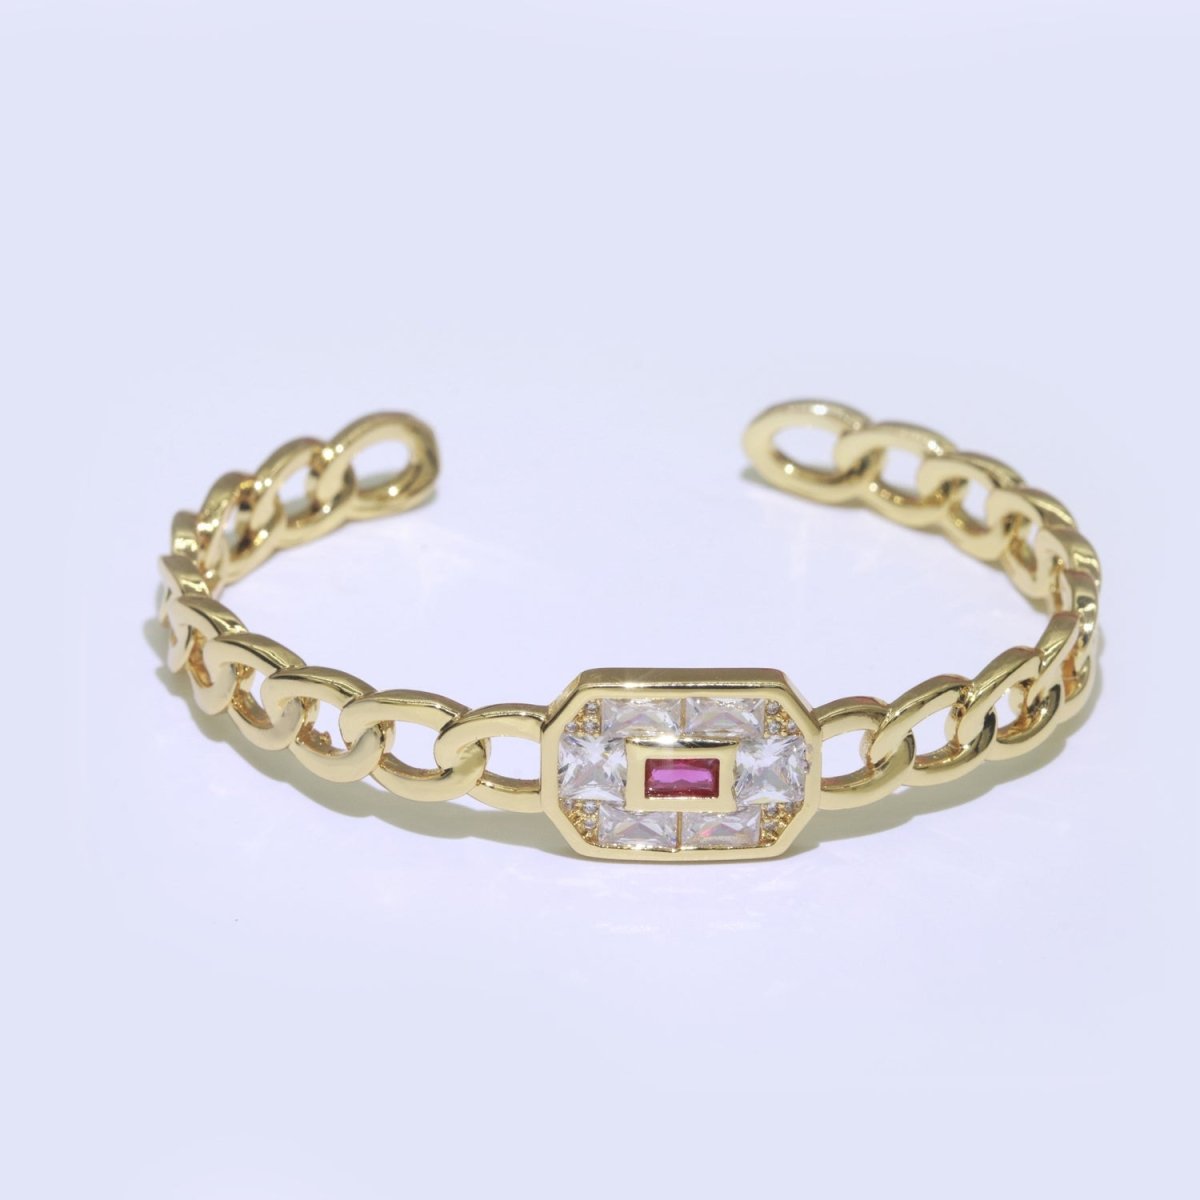 24K Gold Filled Bangle Bracelet Micro Pave Open Adjustable Curb Chain Link Bracelet Wholesale Stacking Bracelet Fashion Jewelry | WA-040 WA-041 WA-042 Clearance Pricing - DLUXCA